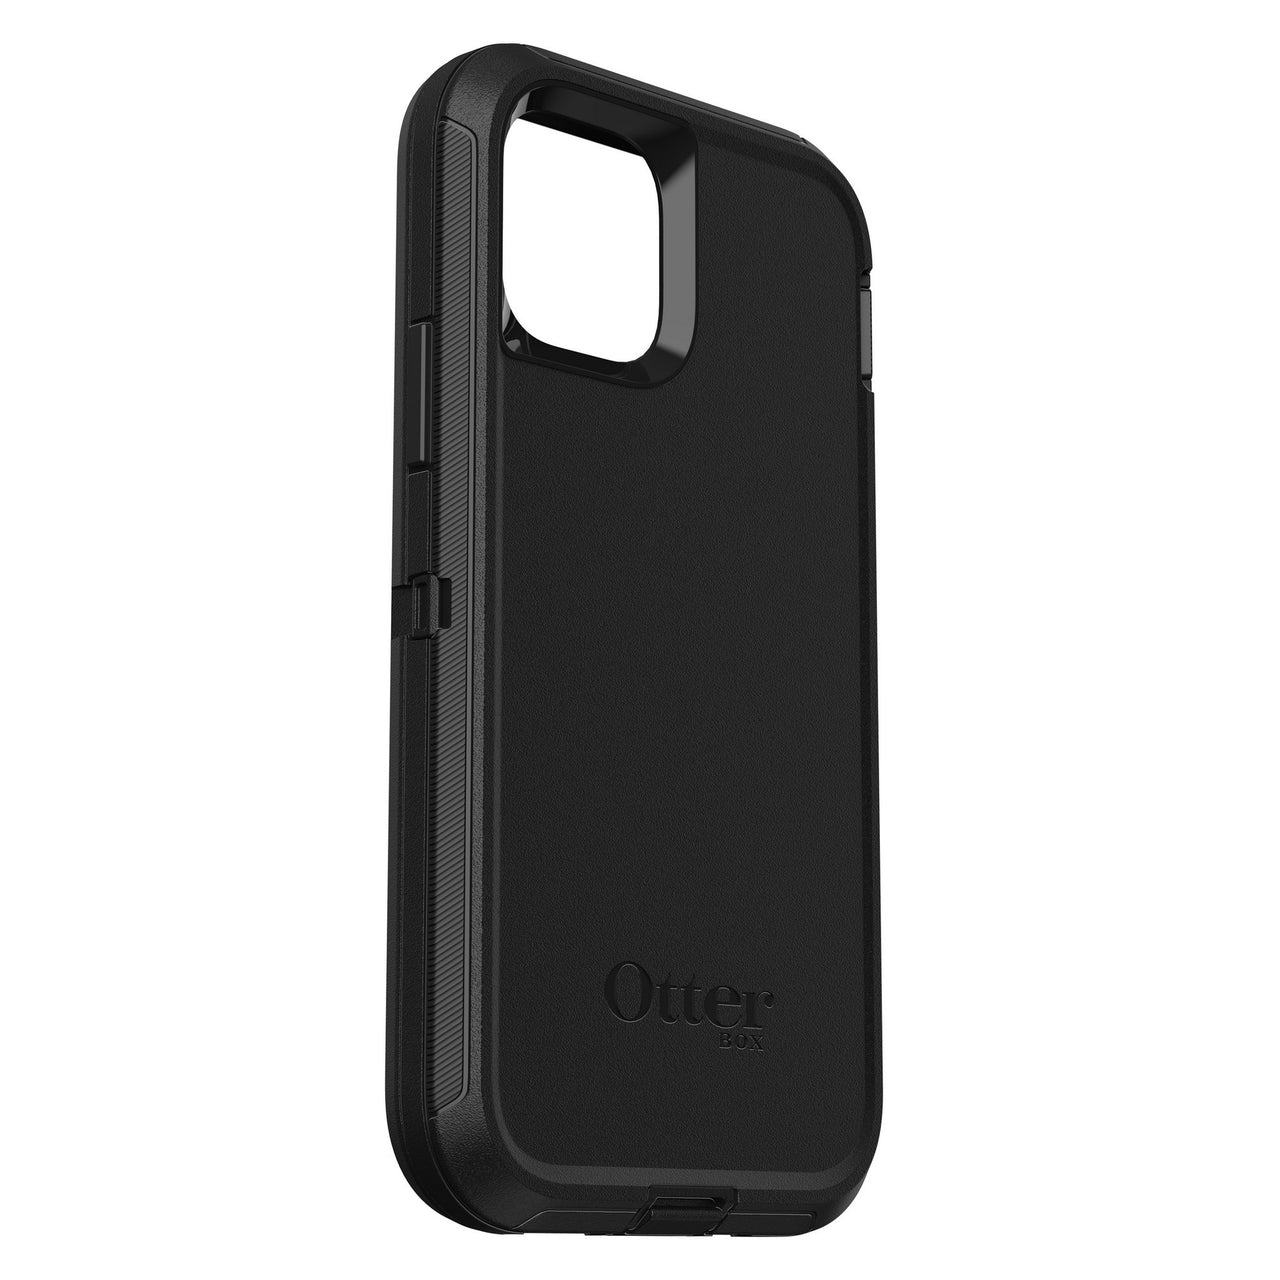 Otterbox Defender Case Suits Iphone 11 Pro - Black